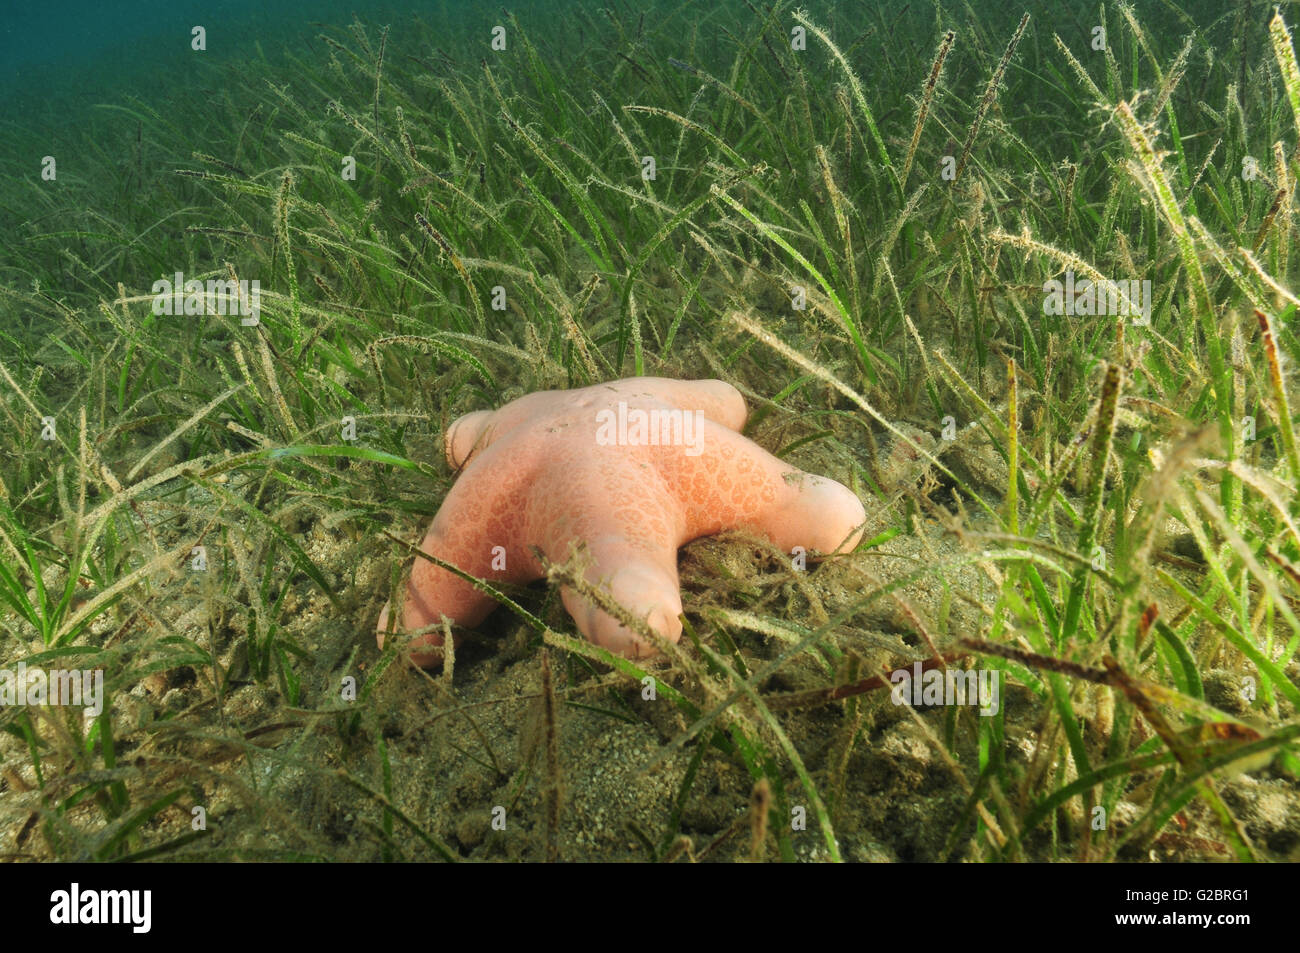 Pink sea star in sea grass Stock Photo